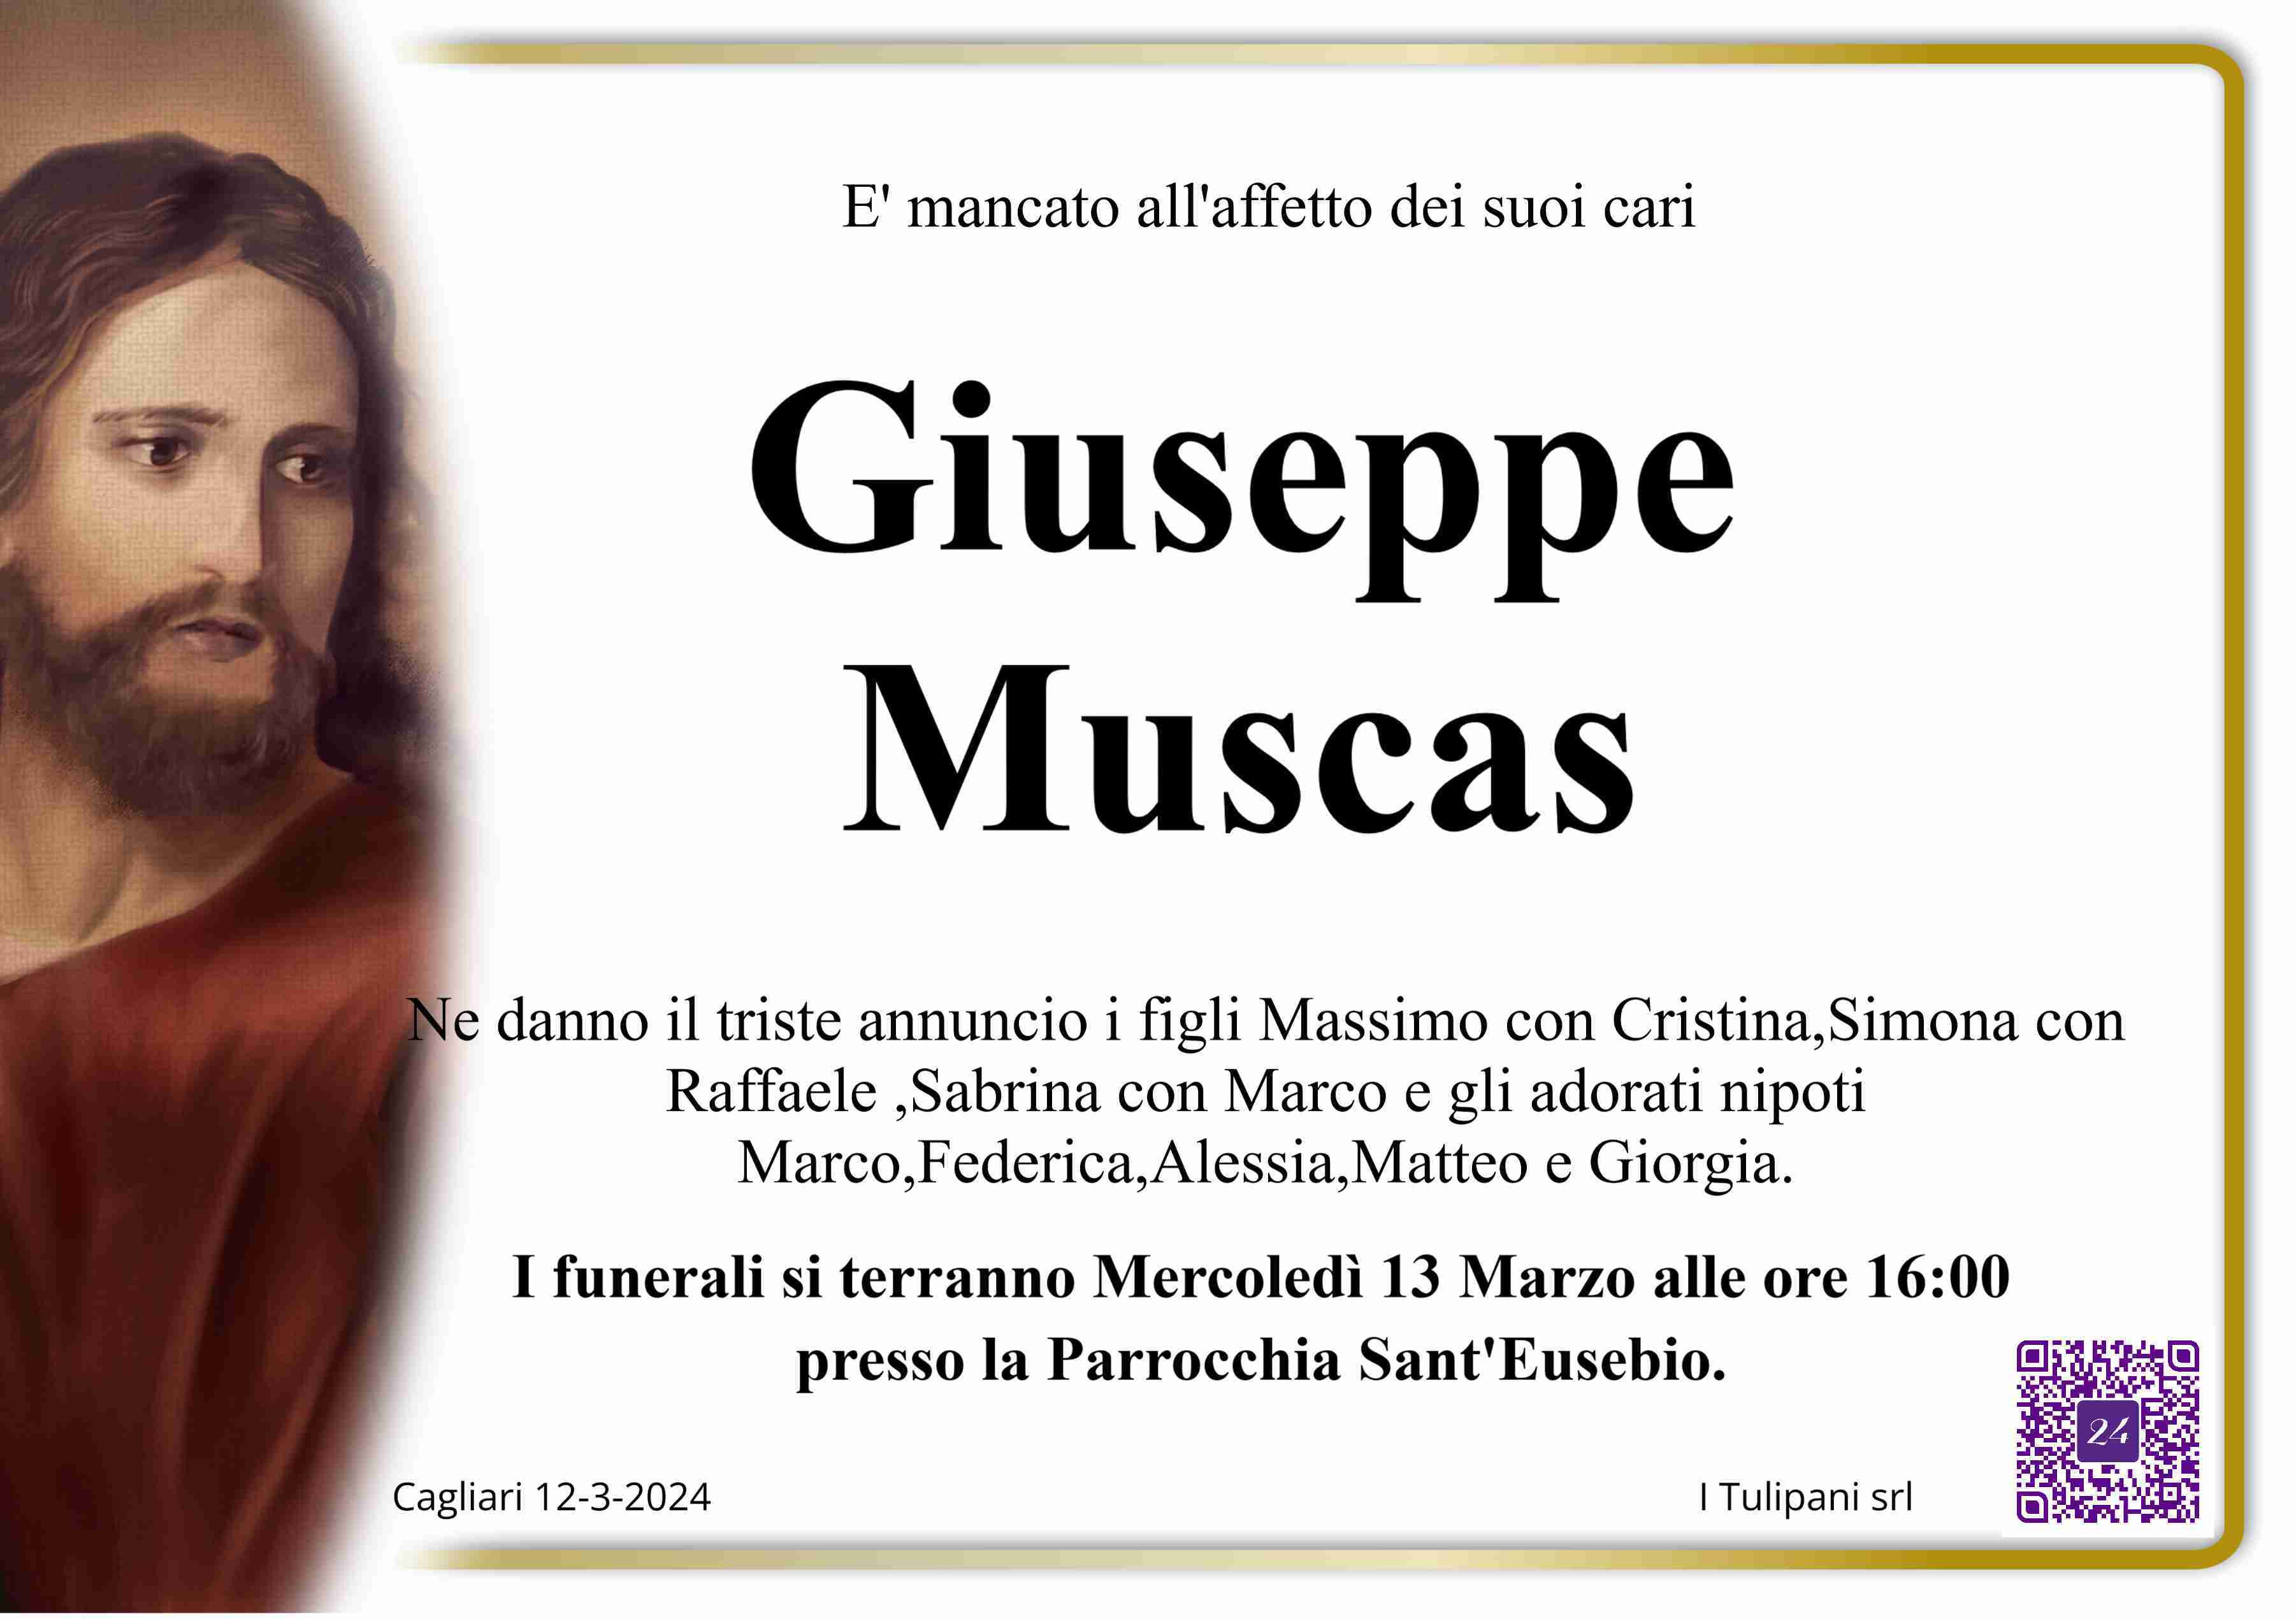 Giuseppe Muscas